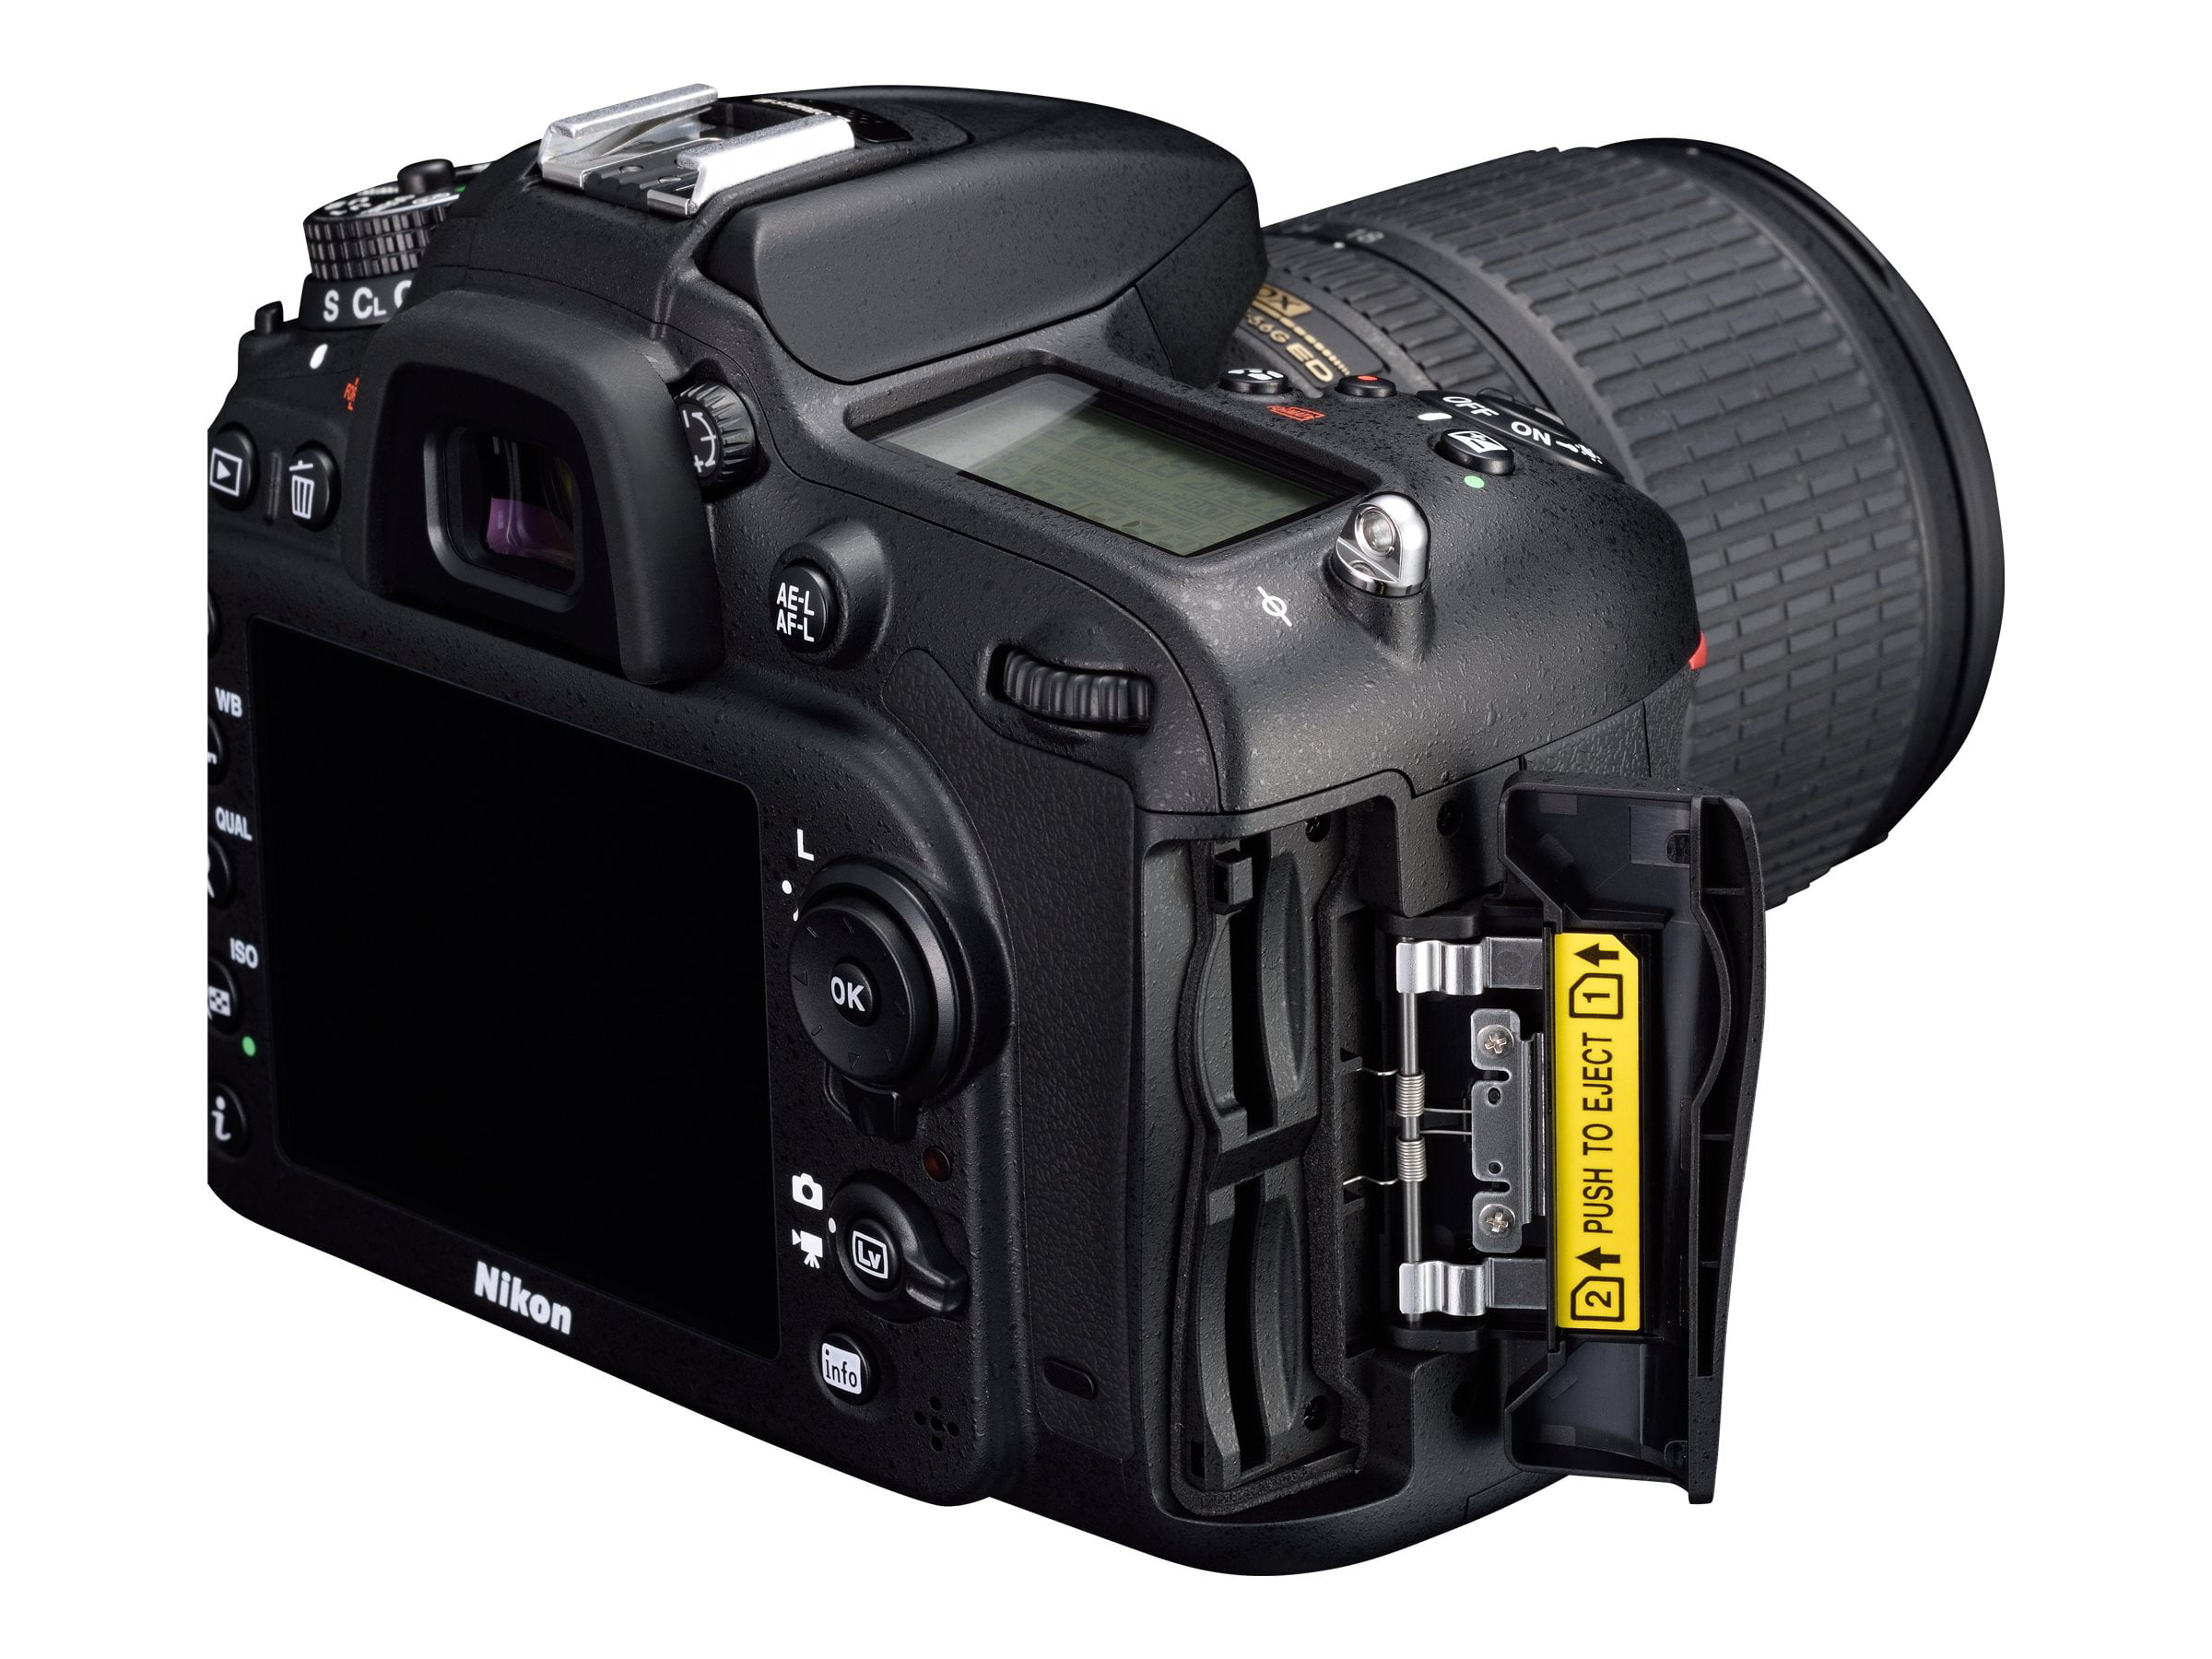 Nikon D7200 - Digital camera - SLR - 24.2 MP - APS-C - 1080p